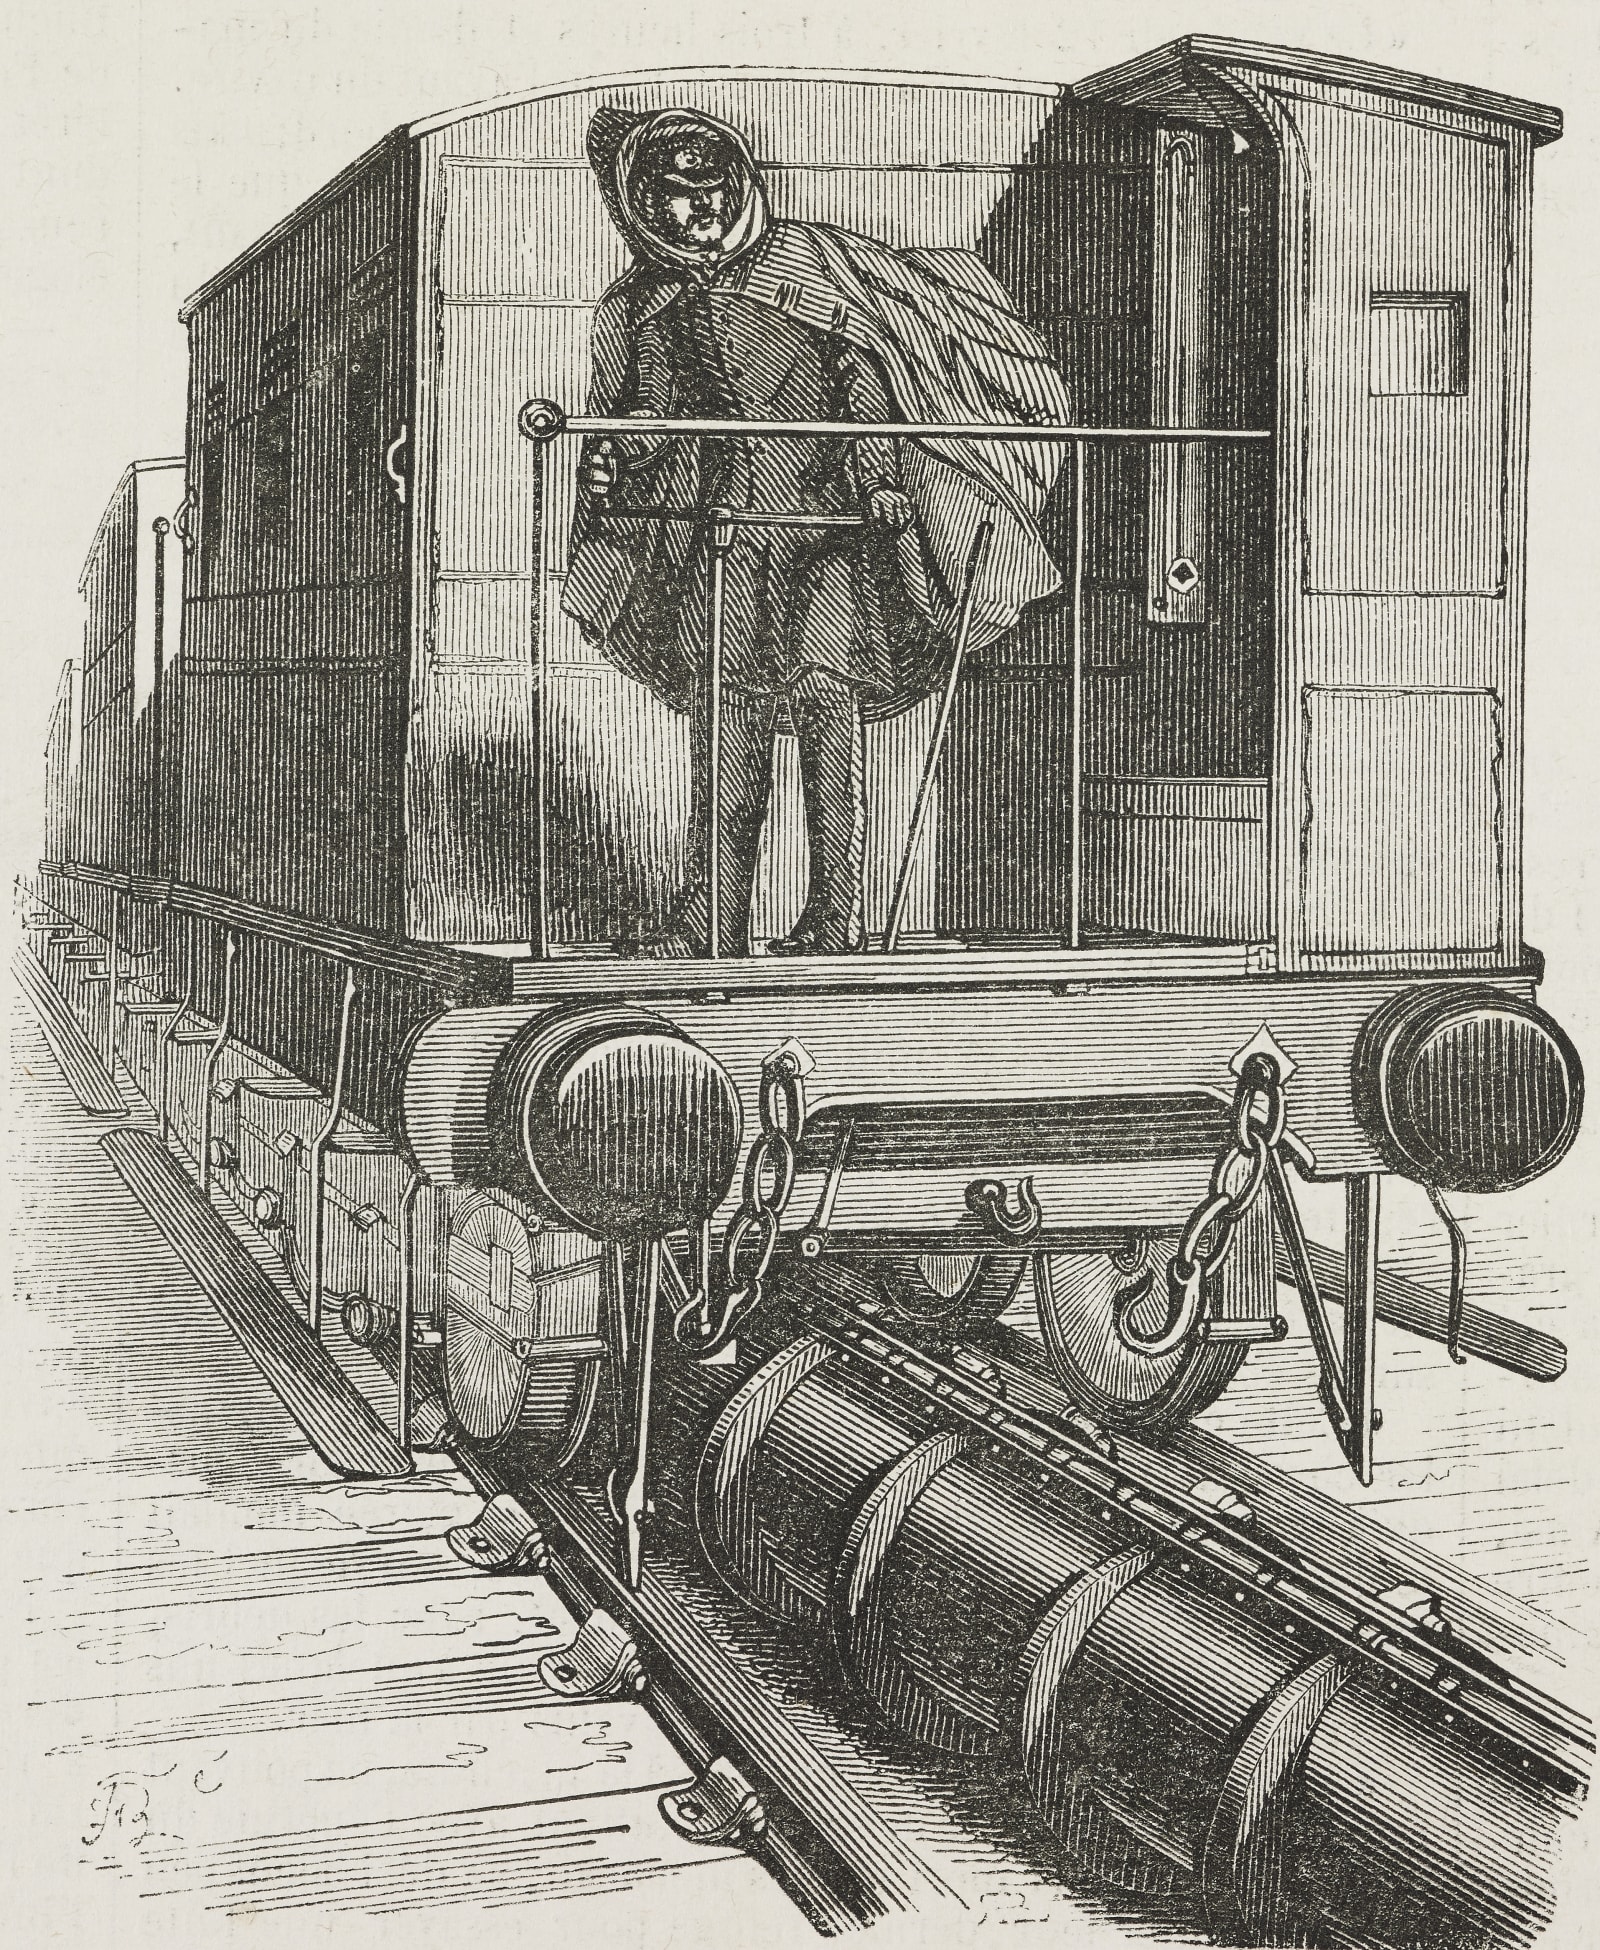 Convoy on the Saint-Germain atmospheric railway